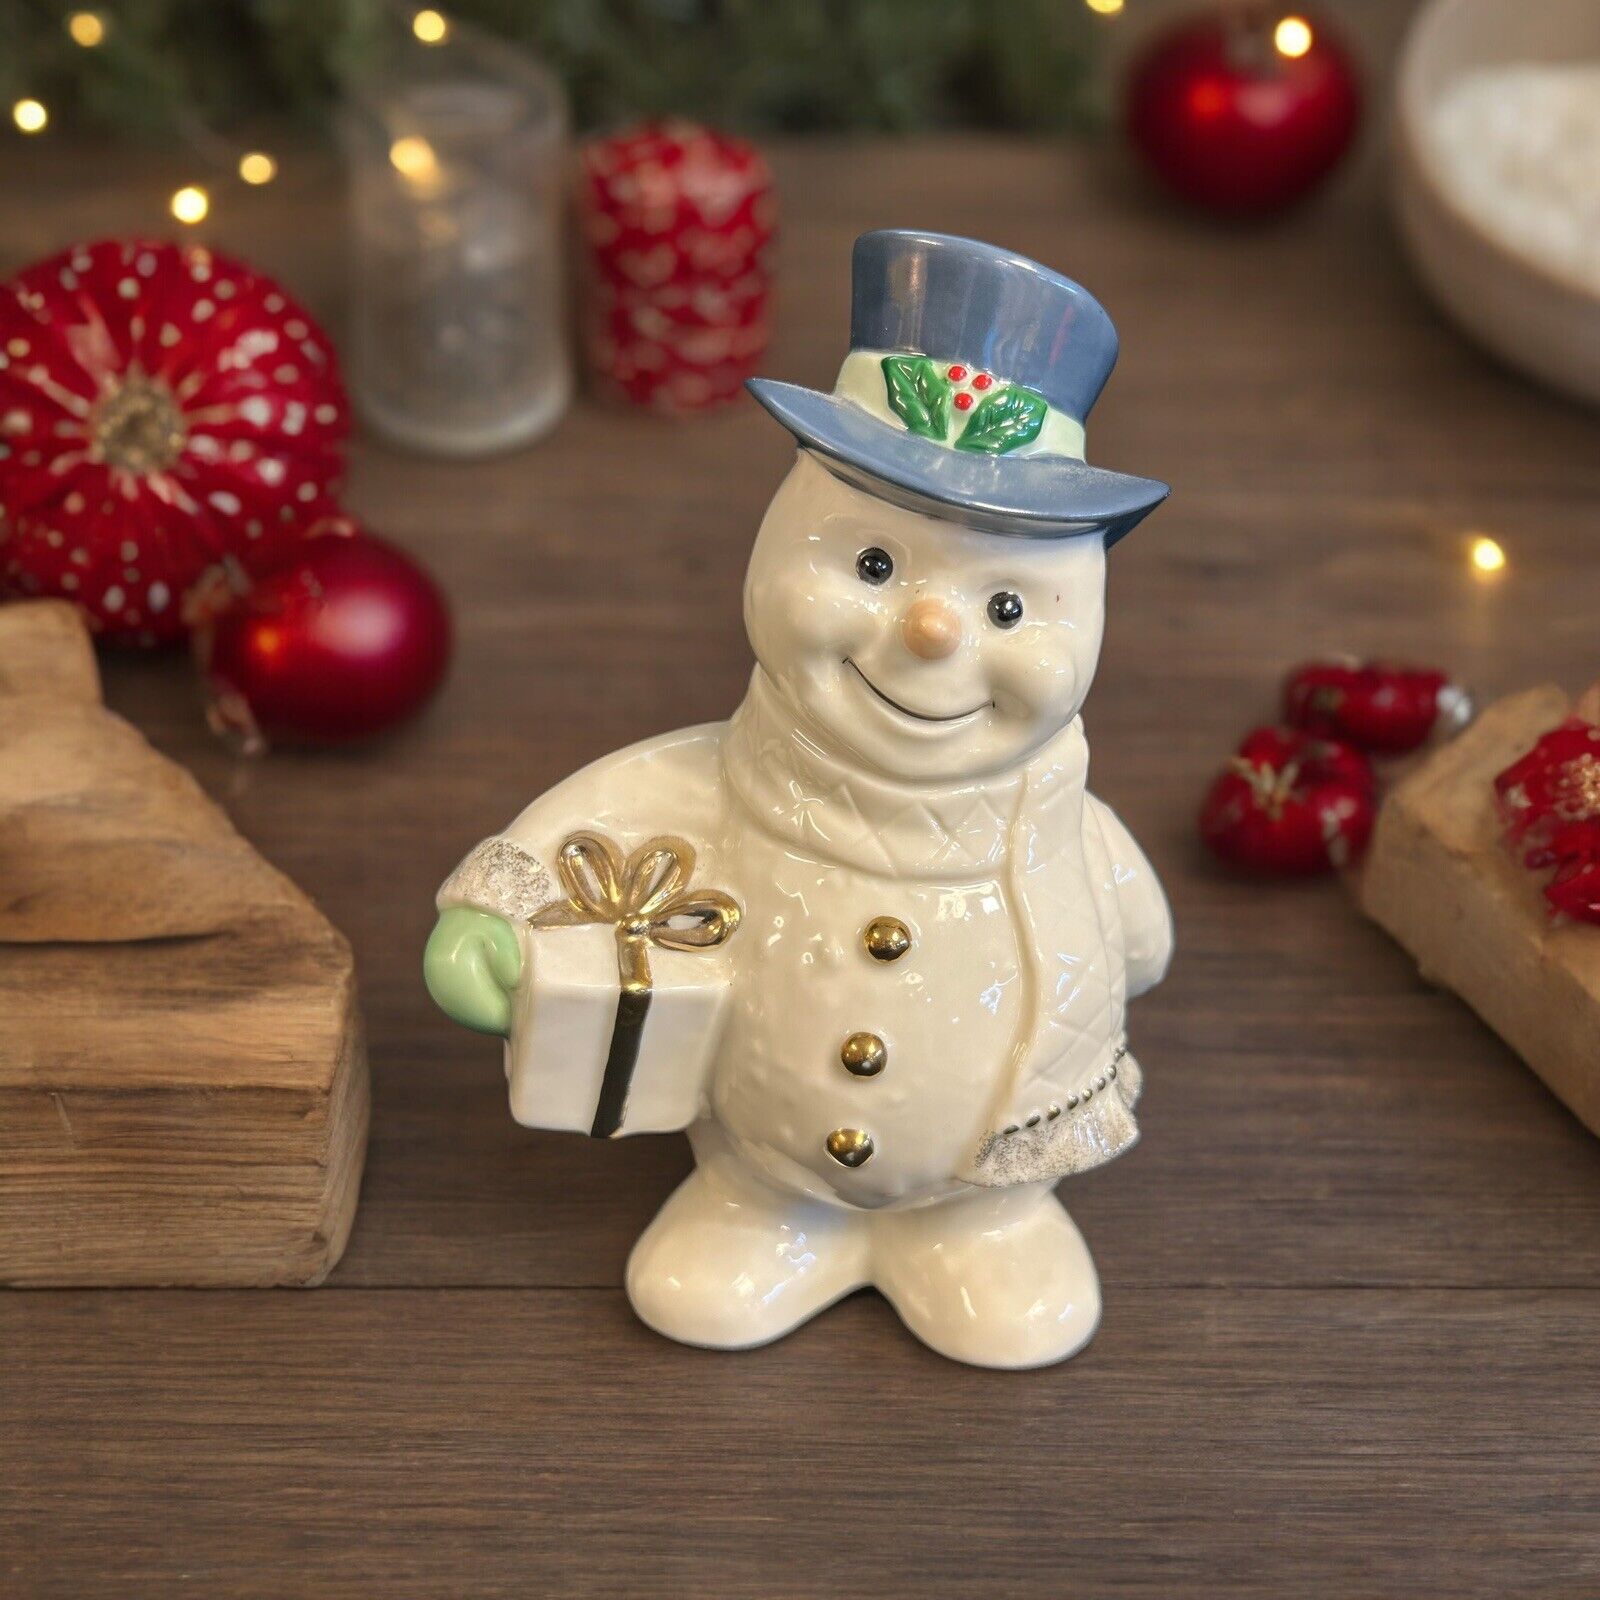 Lenox Snowman Figurine Blue Top Hat Holding a Gift Present 6” Tall